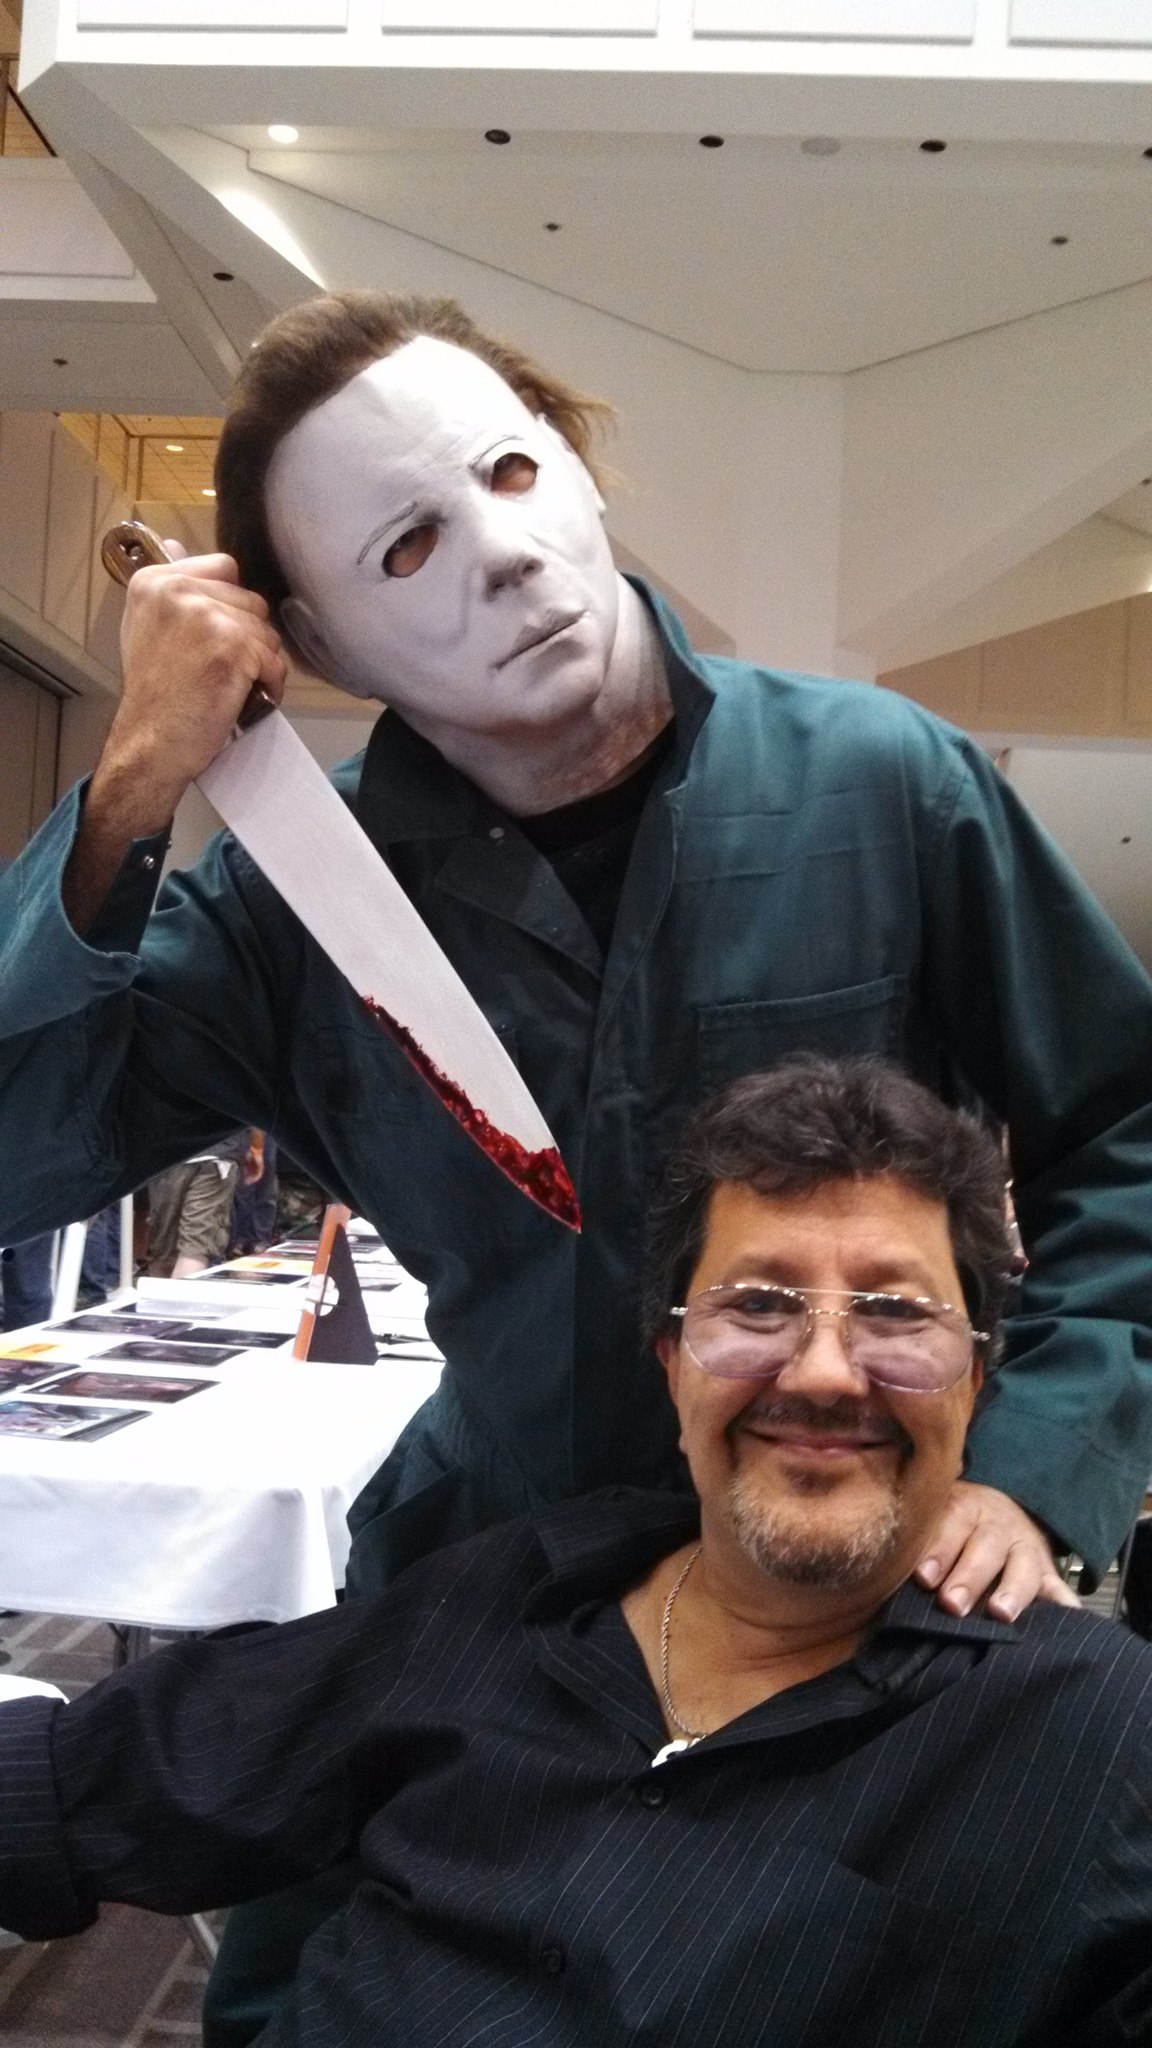 Halloween Convention, Pasadena Ca. October 2013.